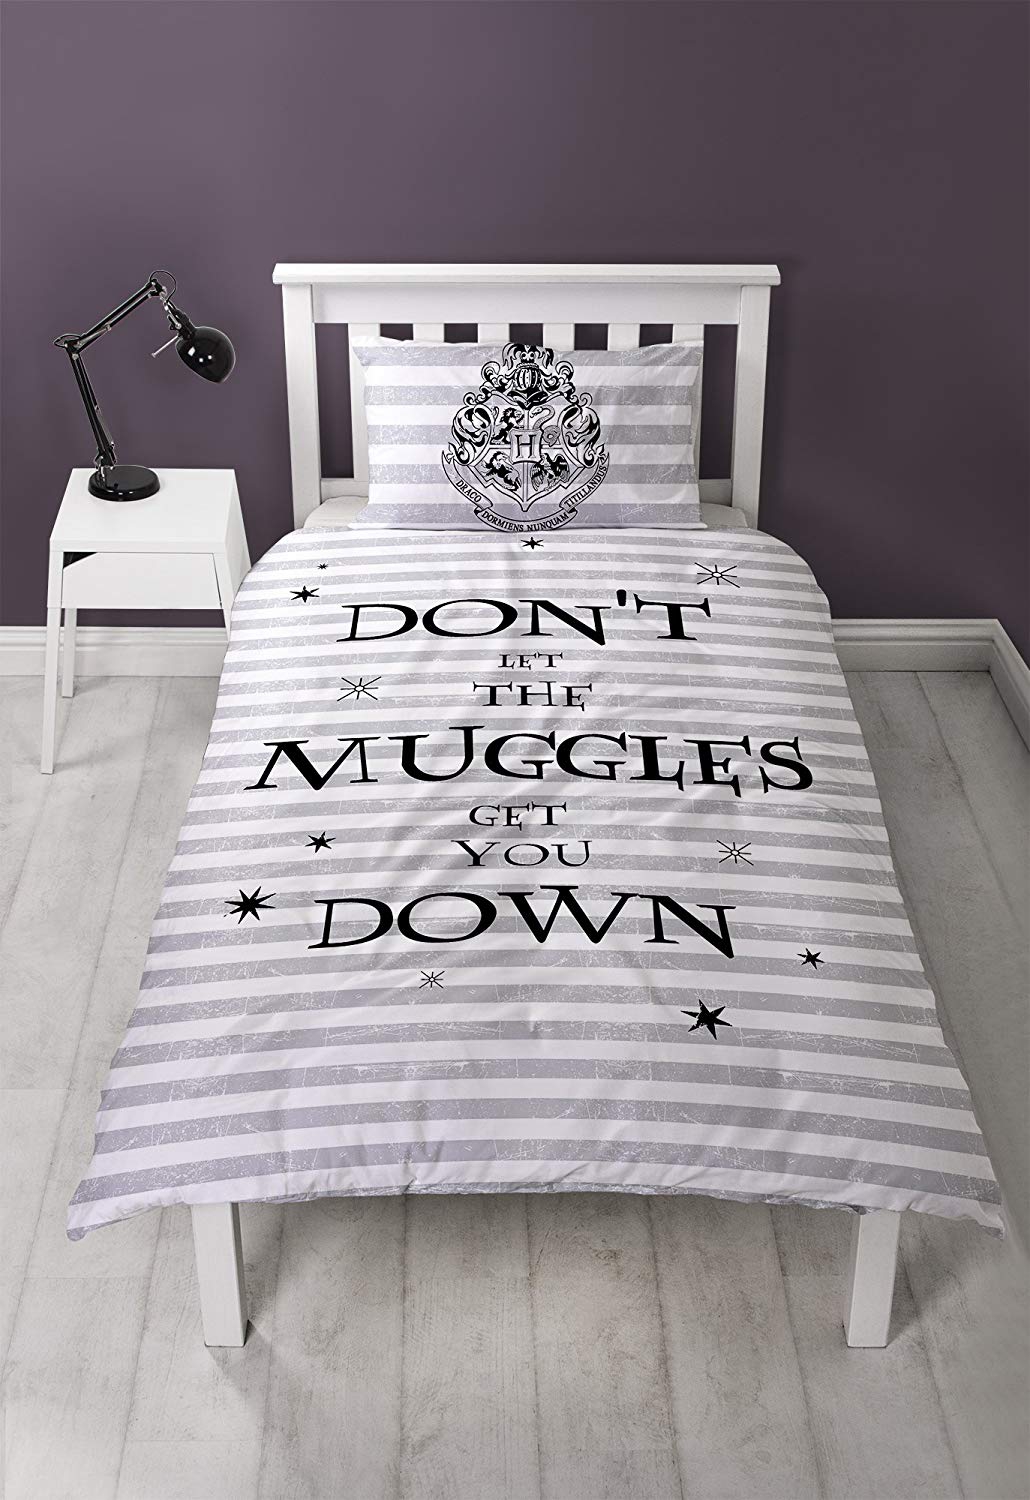 Harry Potter Spell Donâ€™t Let The Muggles Panel Single Bed Duvet Quilt Cover Set